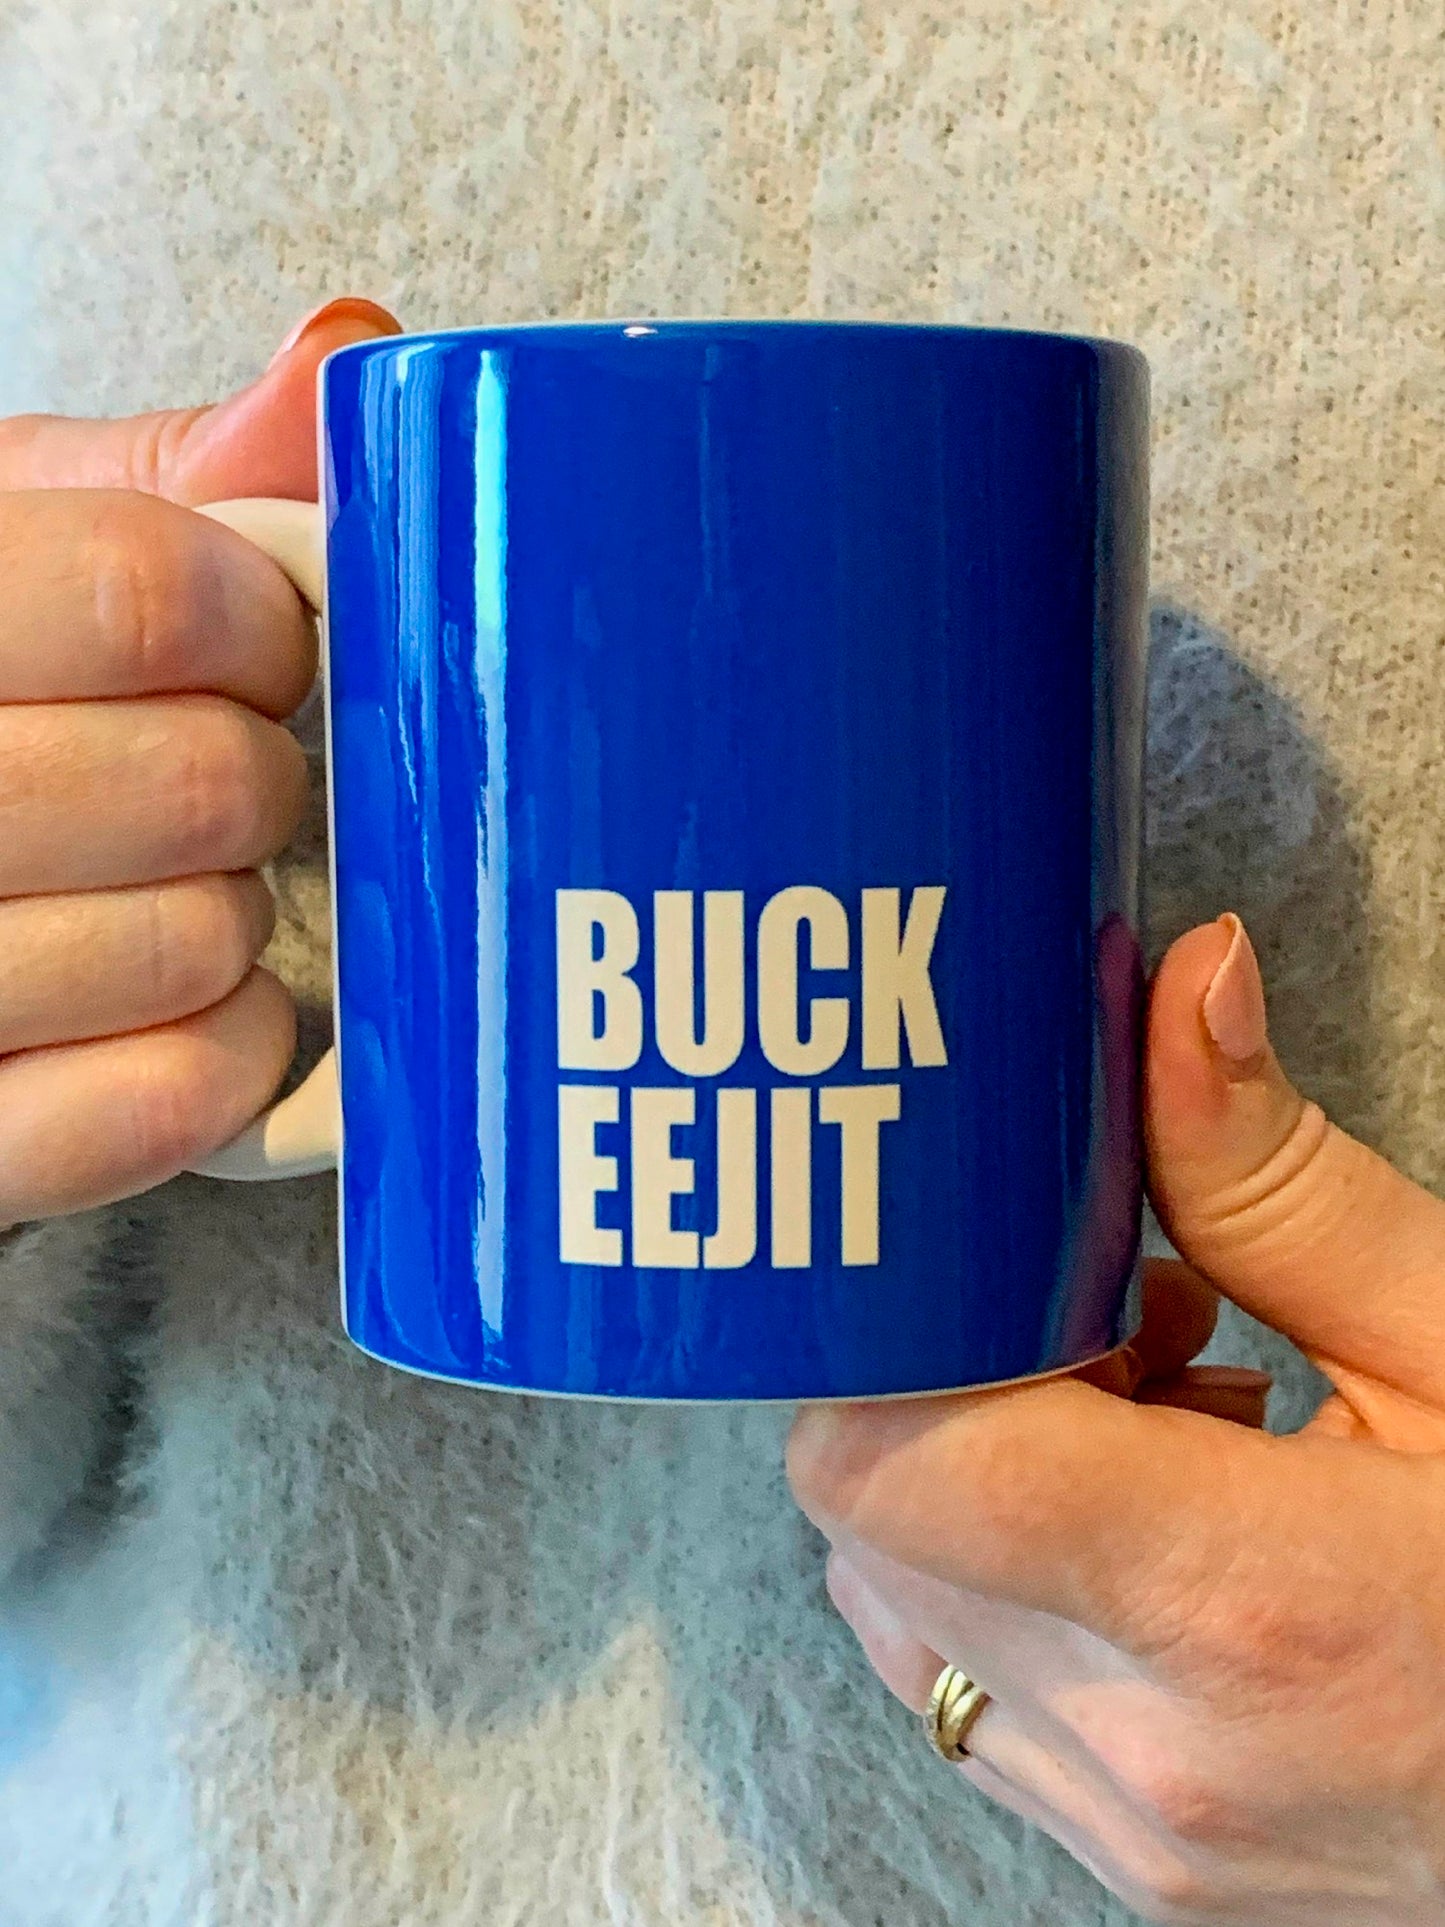 Northern Ireland Slang Mug - Buck Ejit